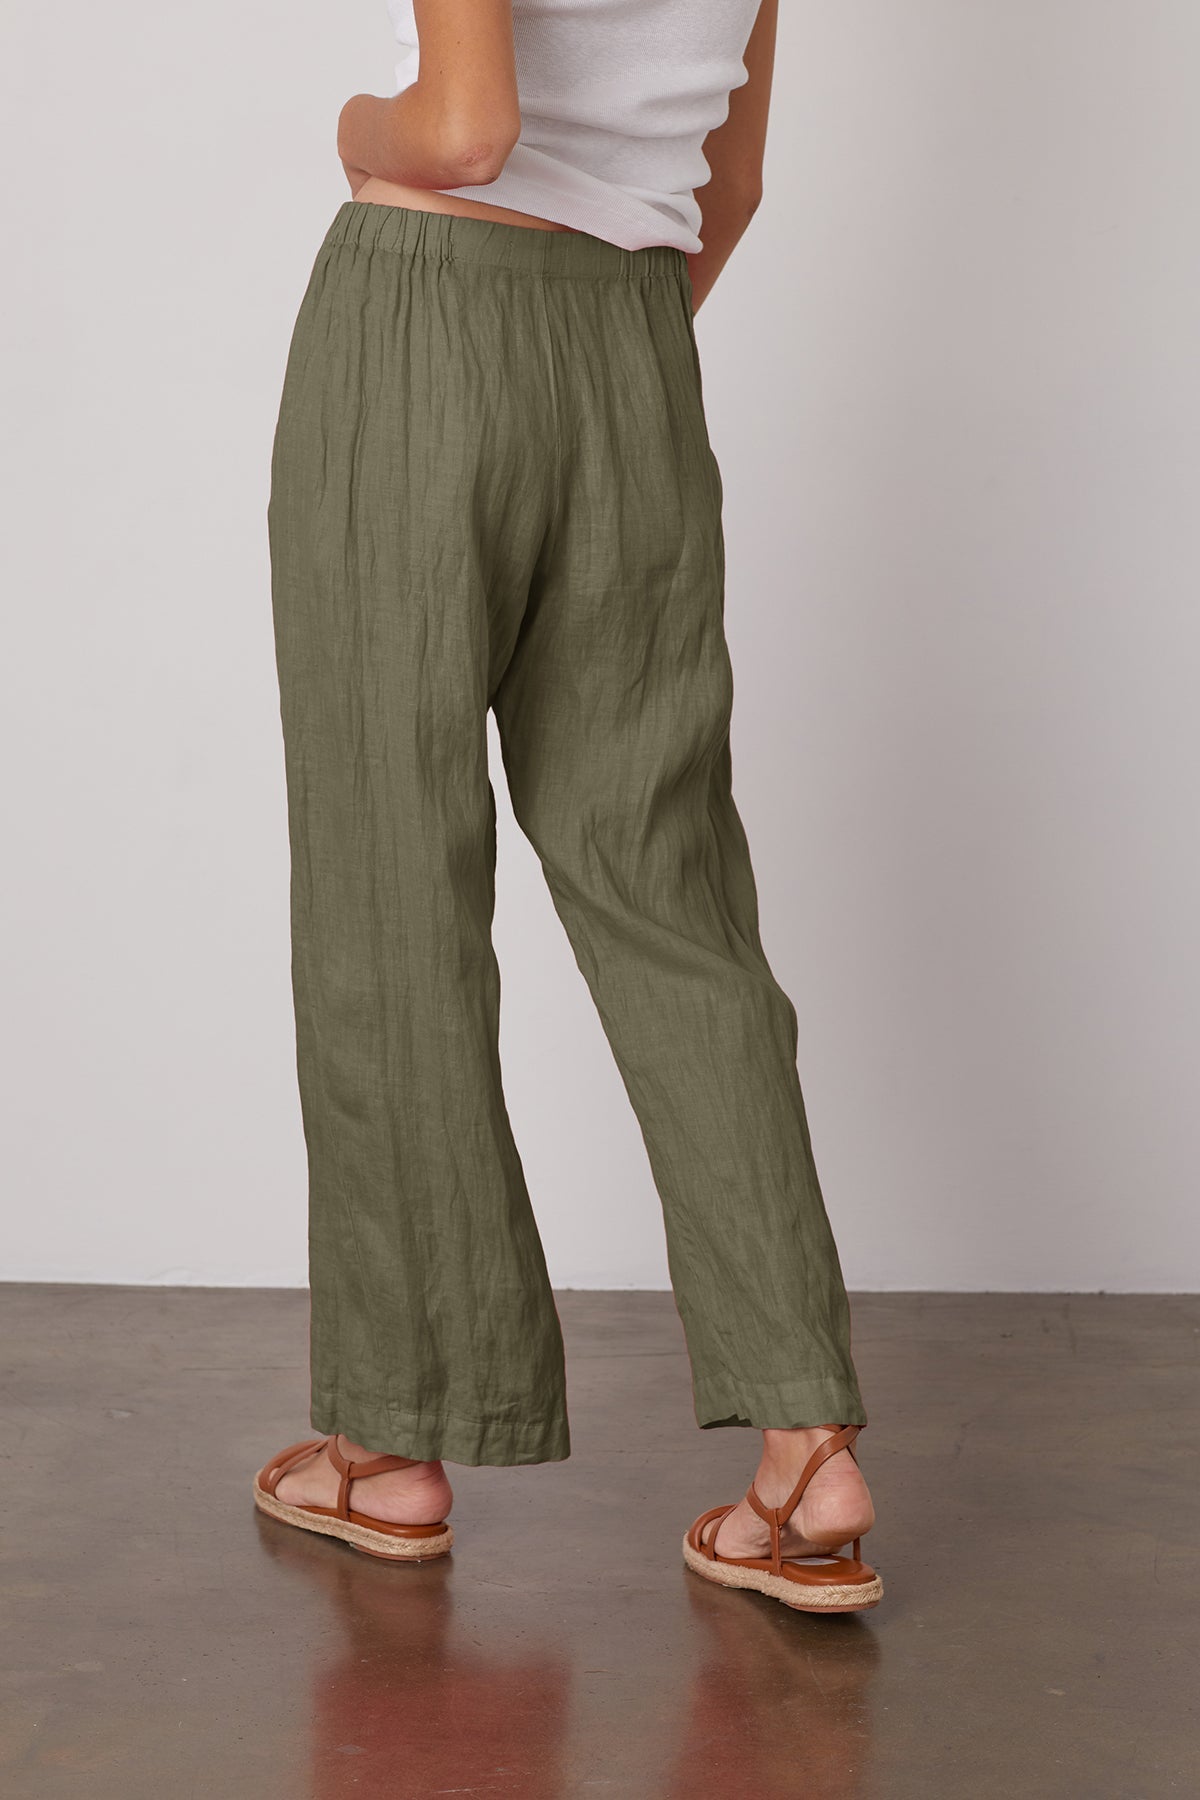 Lola linen pant in olive green back.-25329015685313